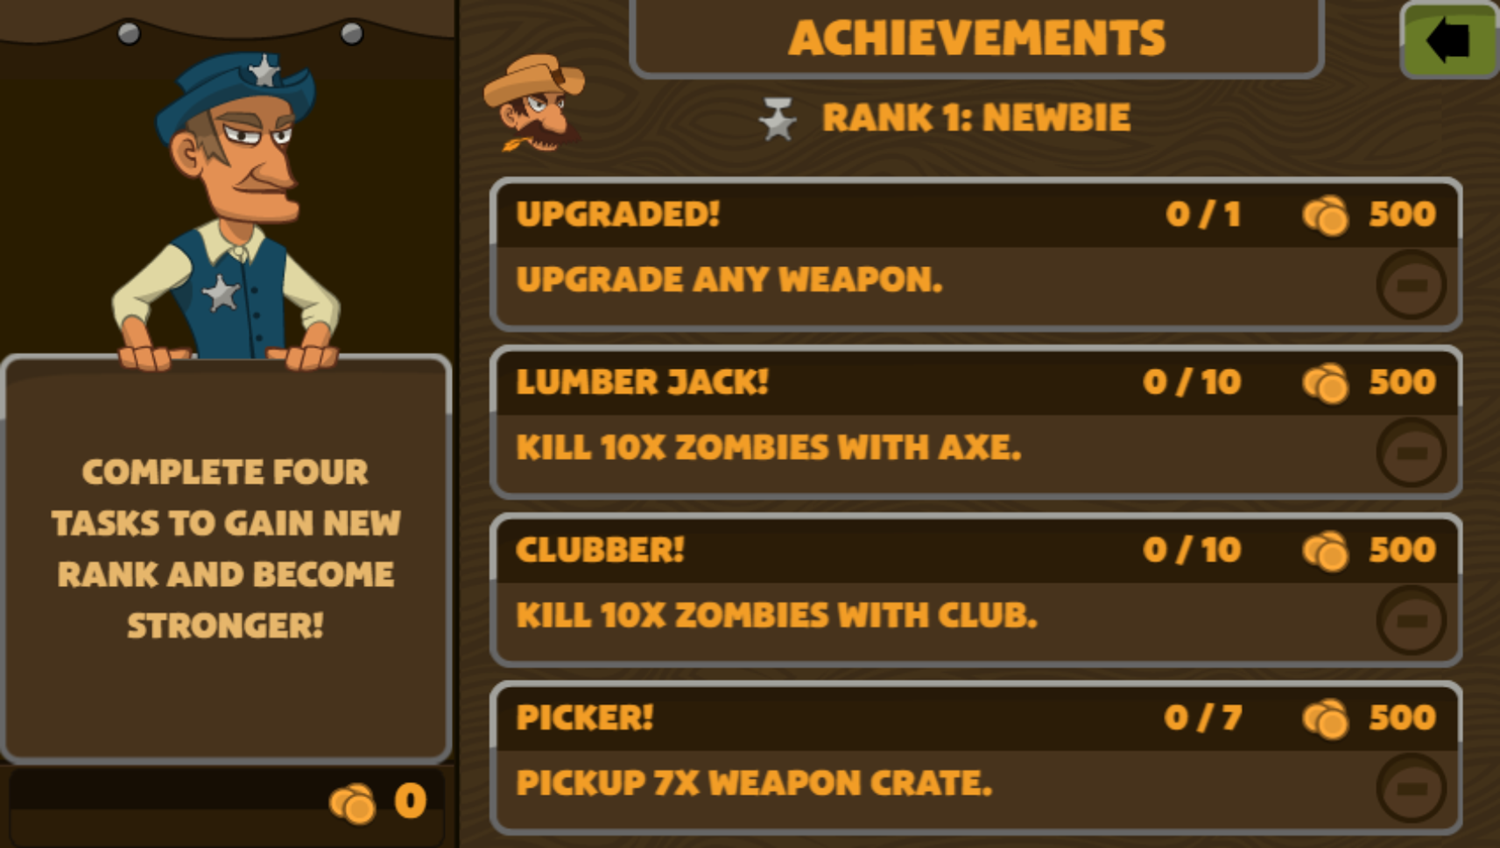 Zombies vs Halloween Game Achievements Screenshot.